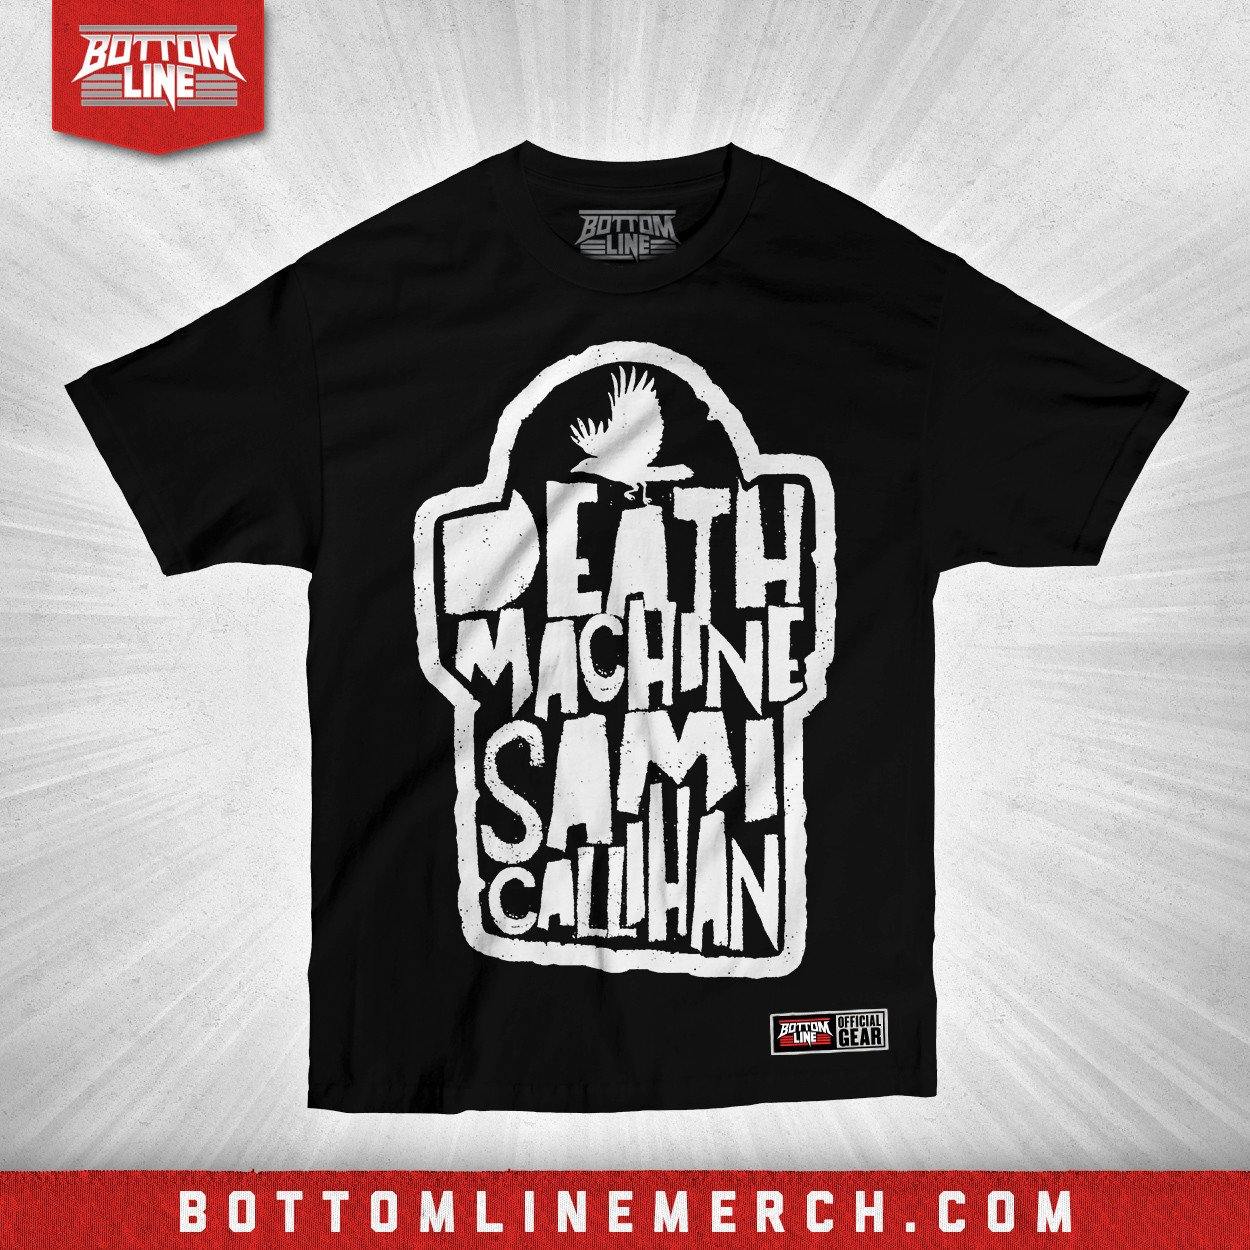 Buy Now – Sami Callihan "Crow" Shirt – Wrestler & Wrestling Merch – Bottom Line